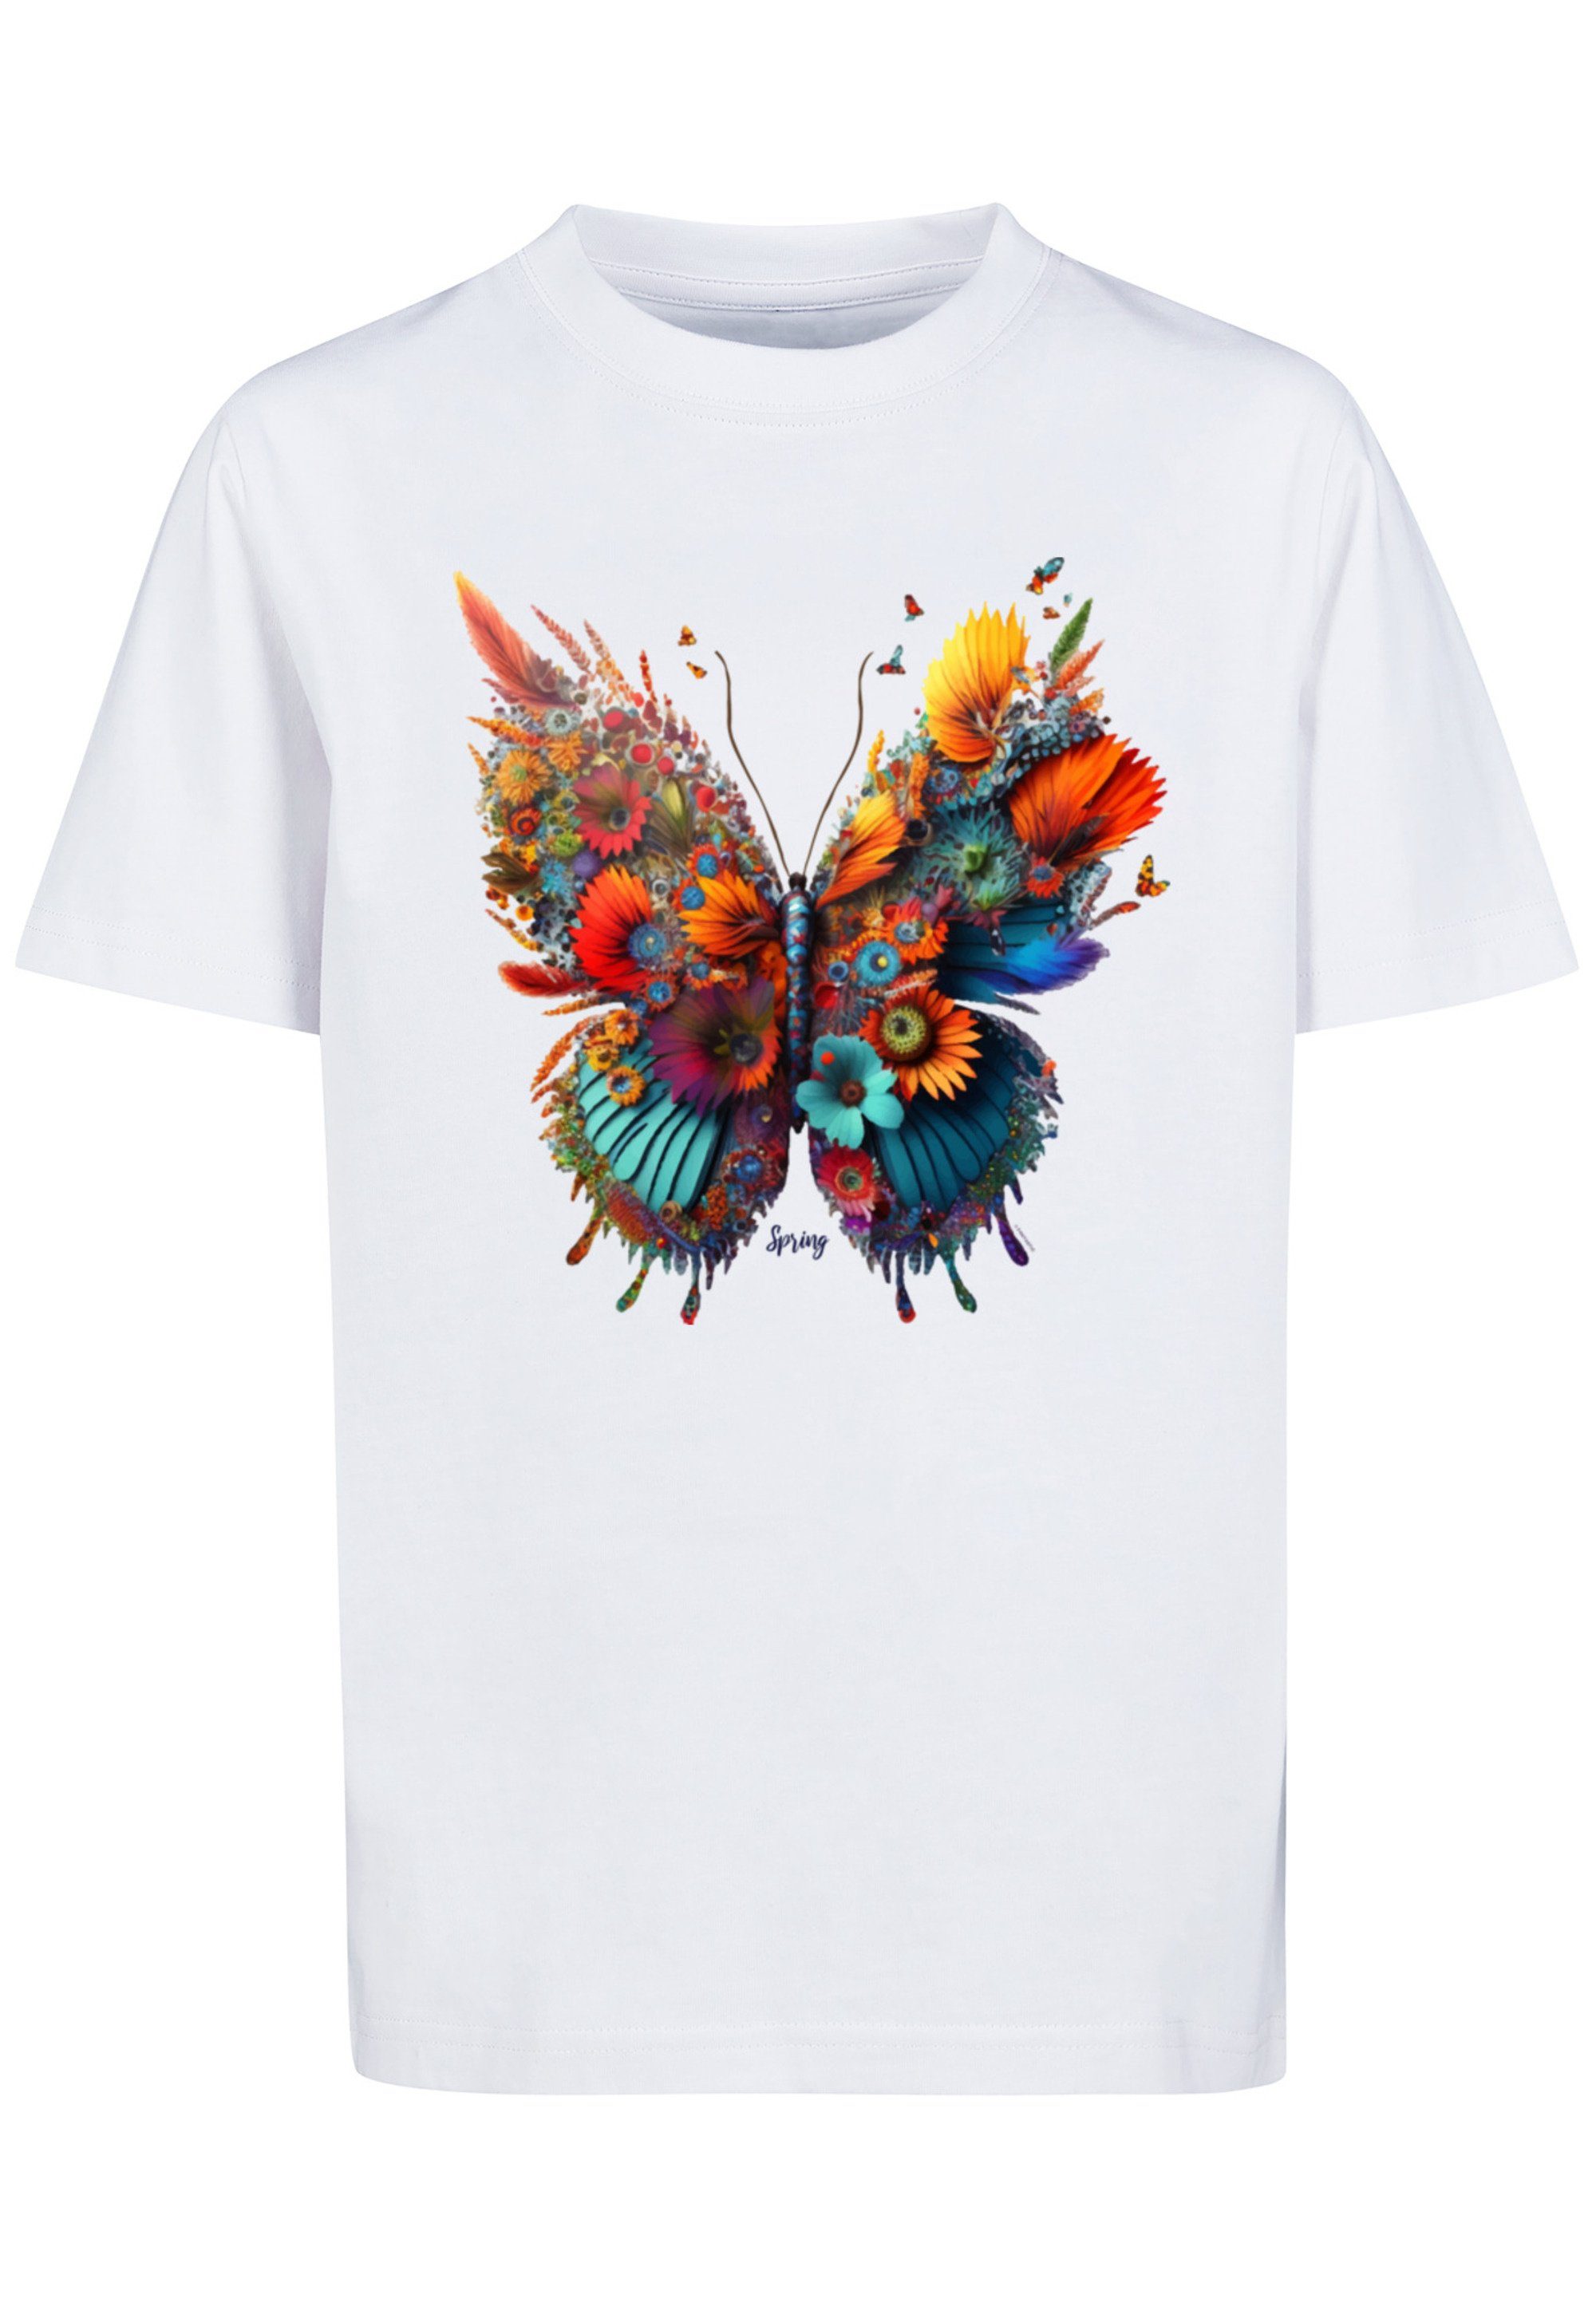 F4NT4STIC T-Shirt Schmetterling Blumen Tee Unisex Print weiß